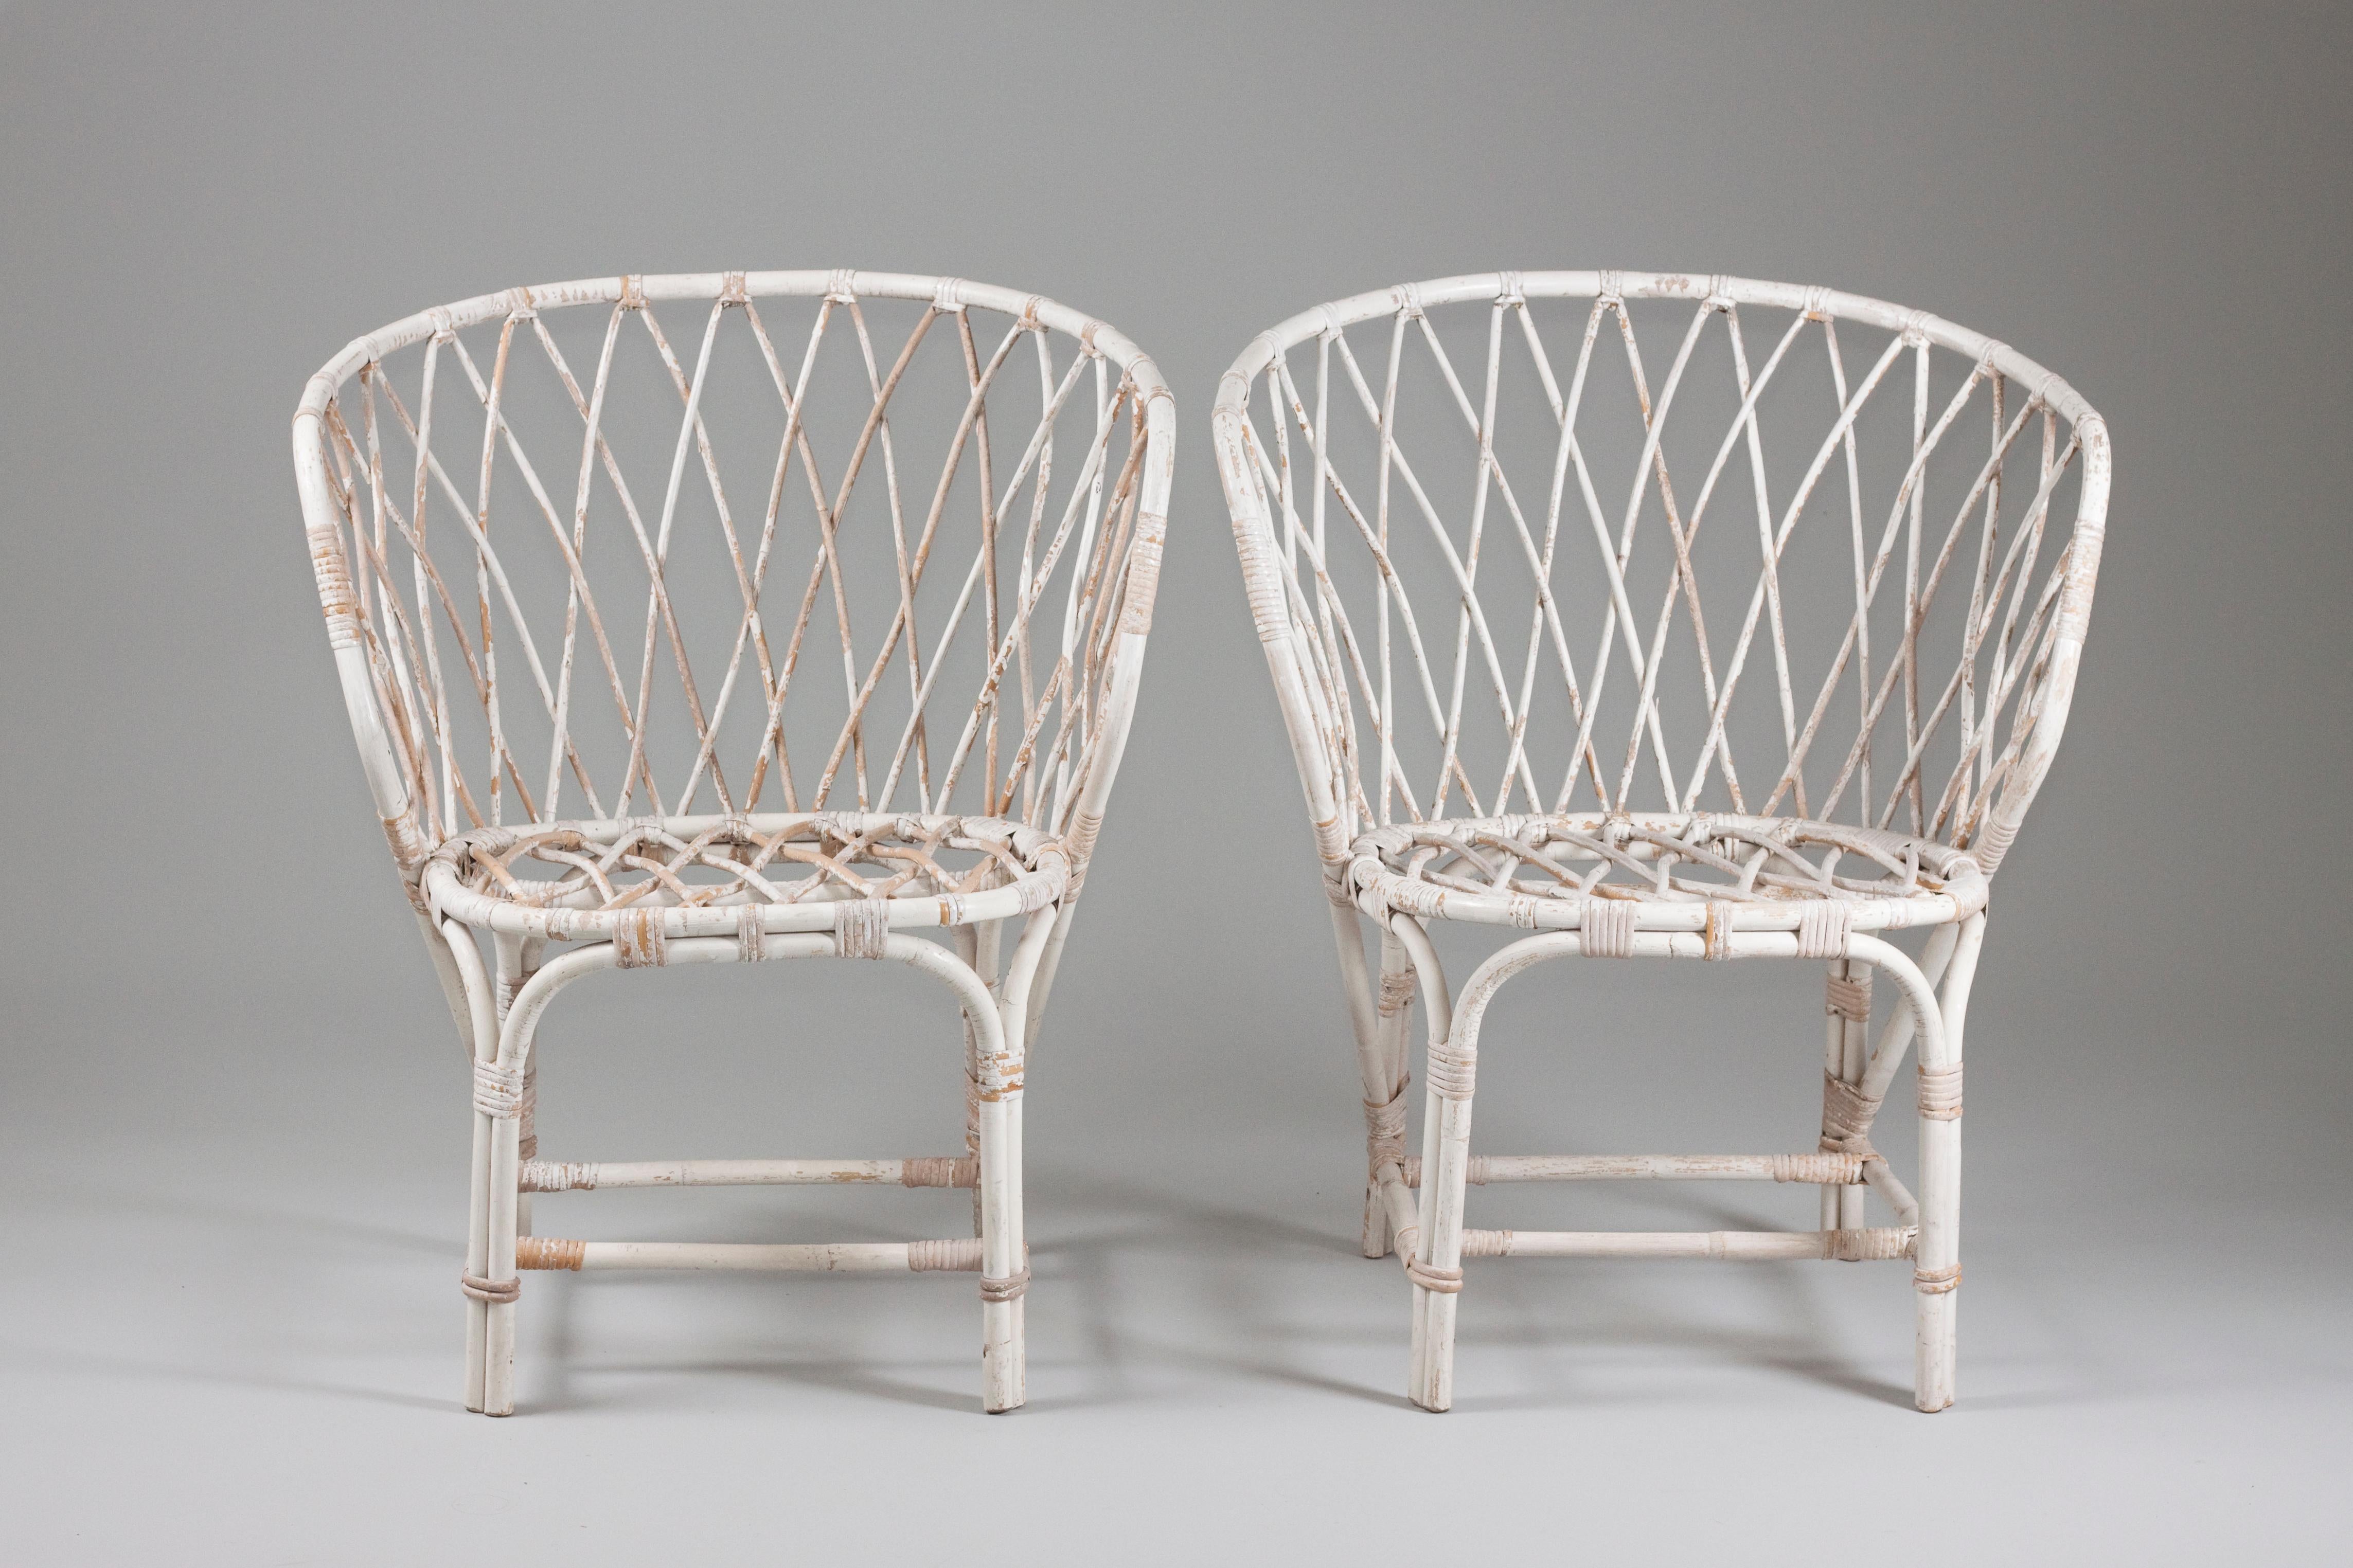 Scandinavian Modern Pair of Mid-Century Modern Rattan Chairs by Maija Heikinheimo for Artek, Finland